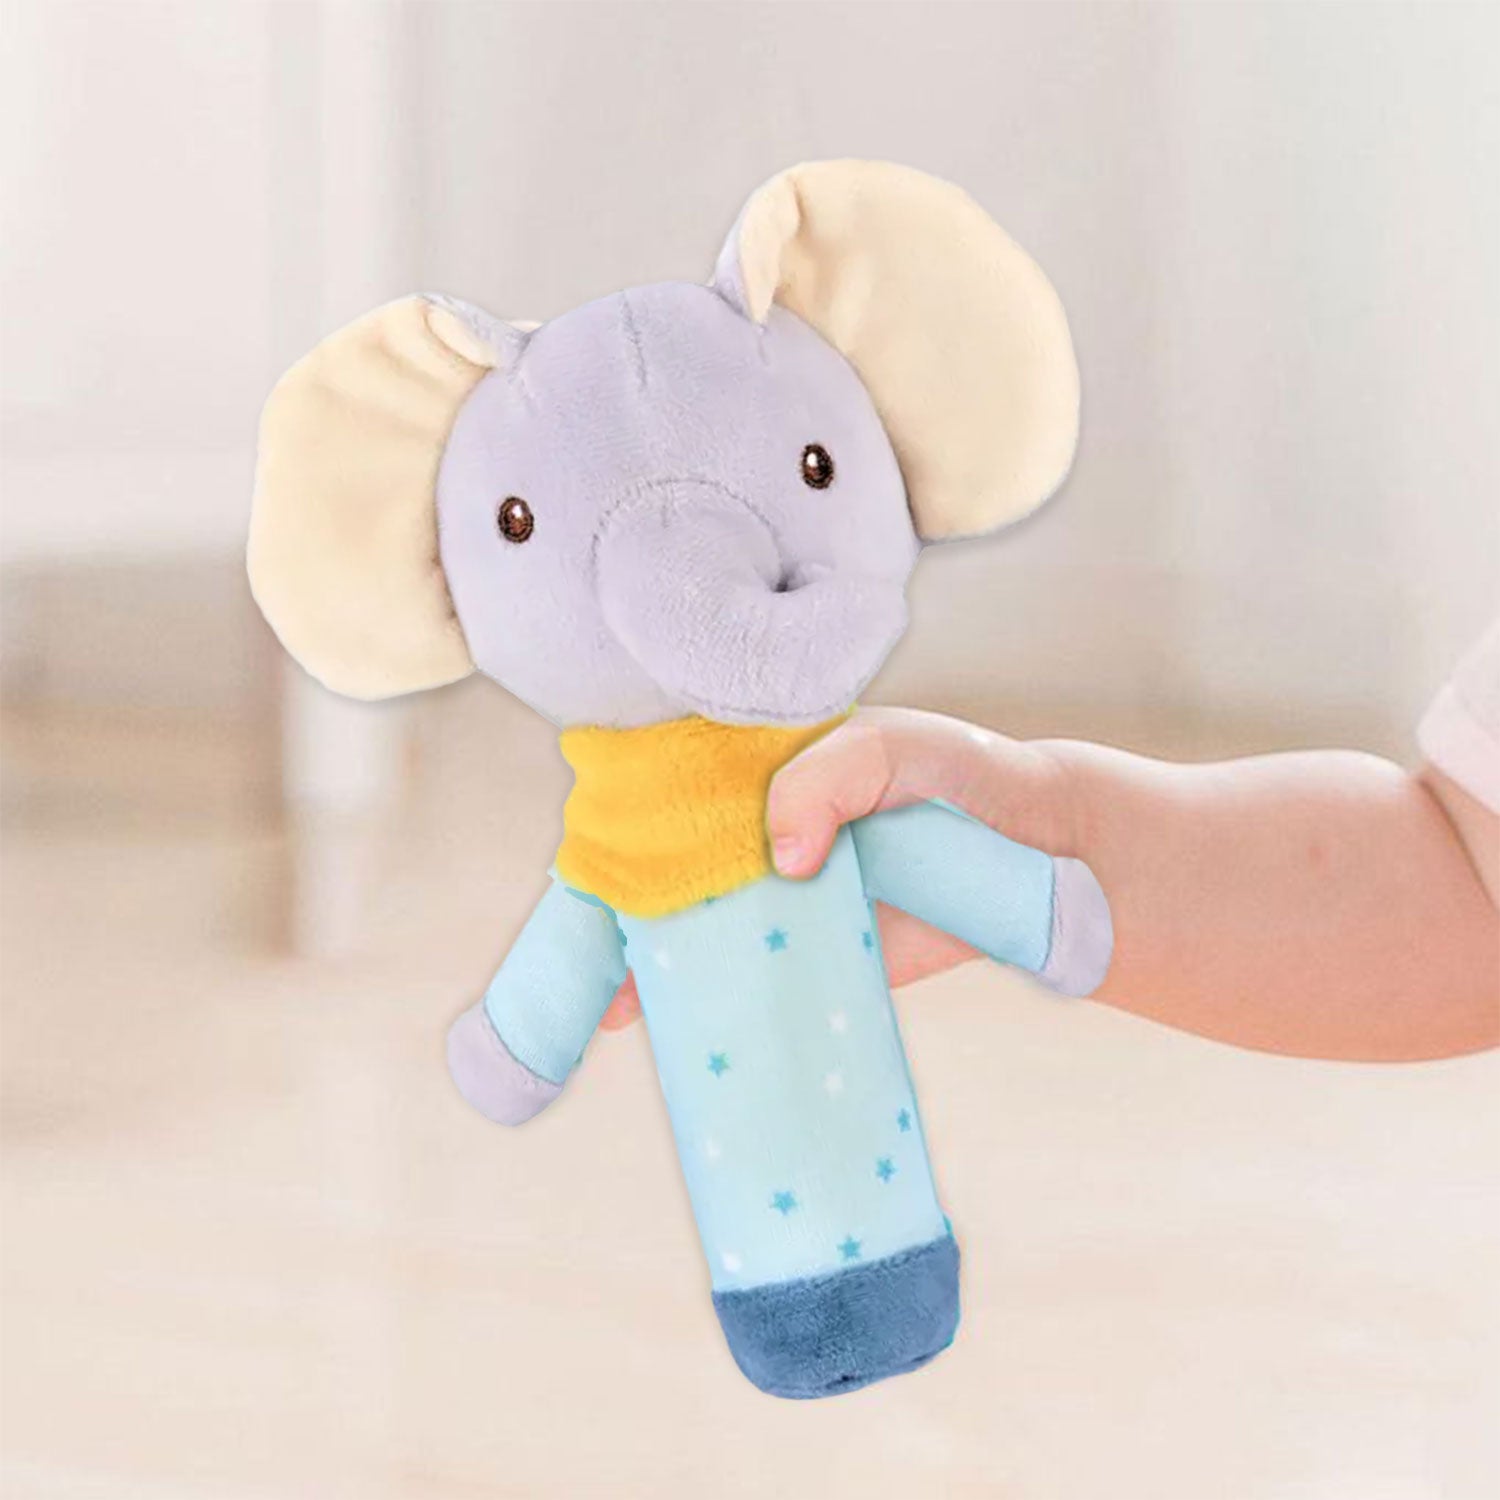 Baby Moo Ellie's Melodies 2 Pack Squeaker Handheld Rattle Toy - Blue